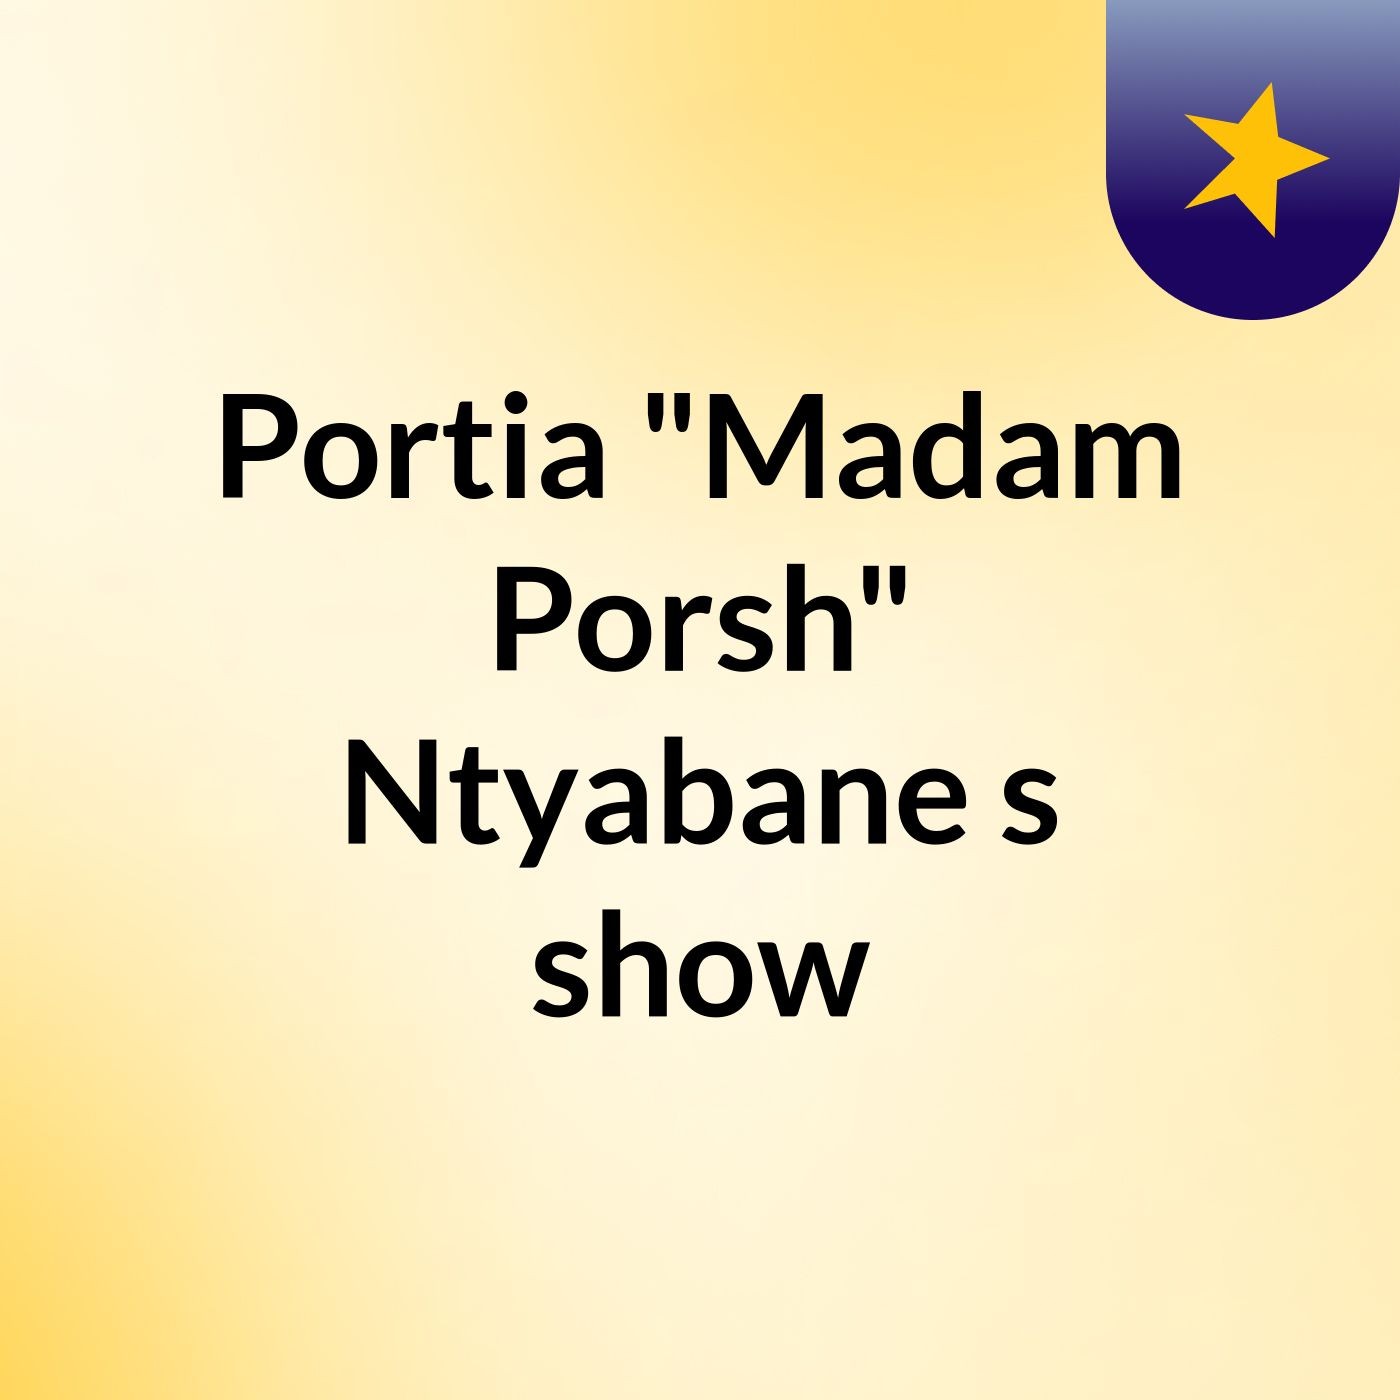 Episode 3 - Portia "Madam Porsh" Ntyabane's show